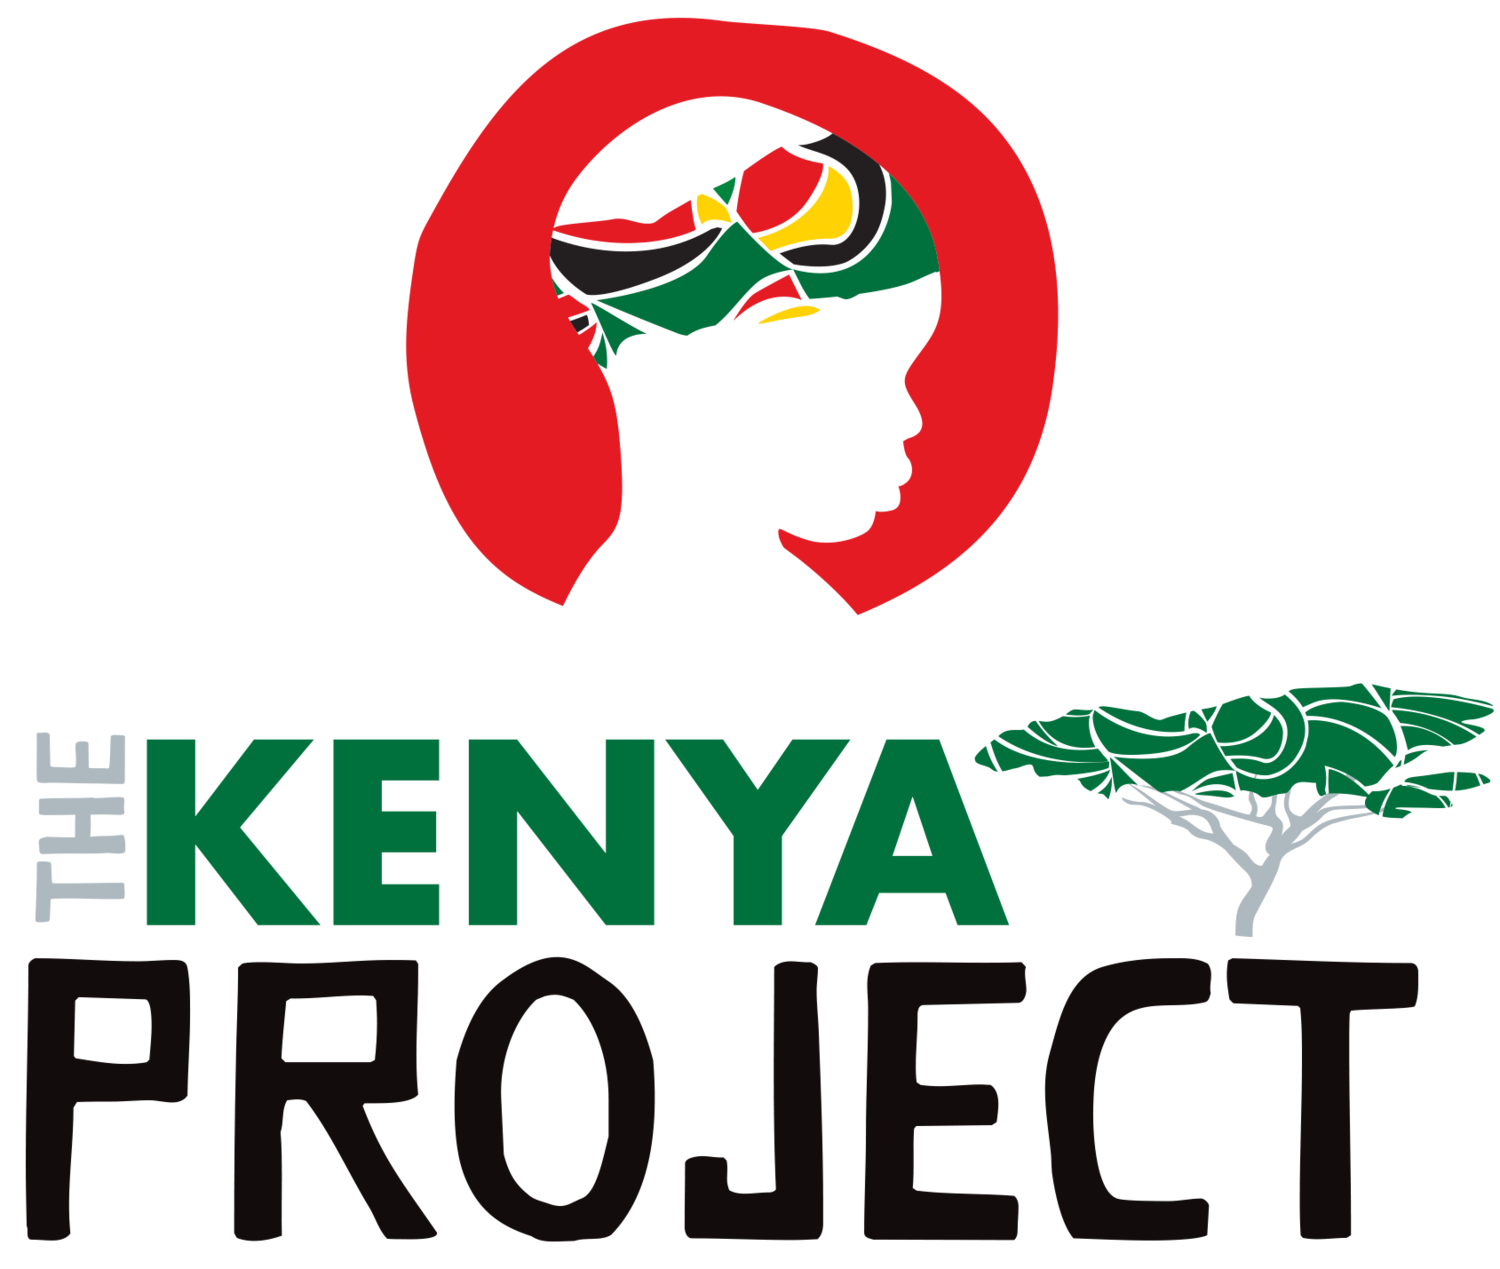 The Kenya Project